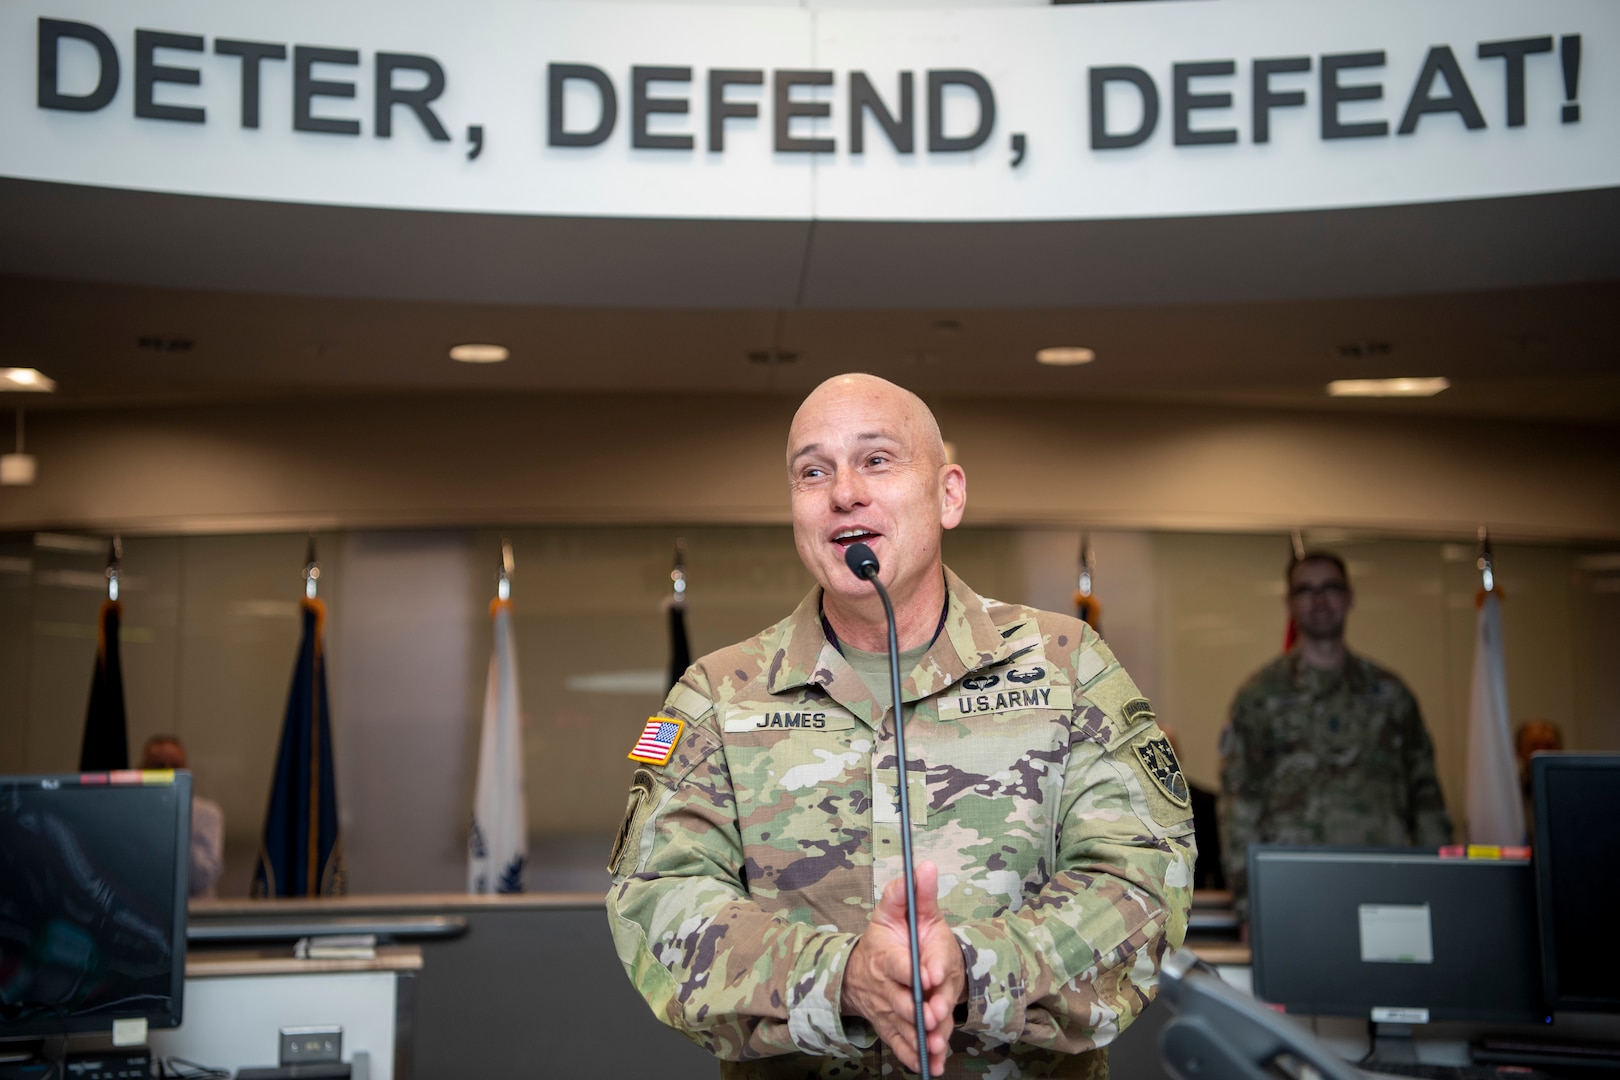 Man in military uniform speaks at podium microphone